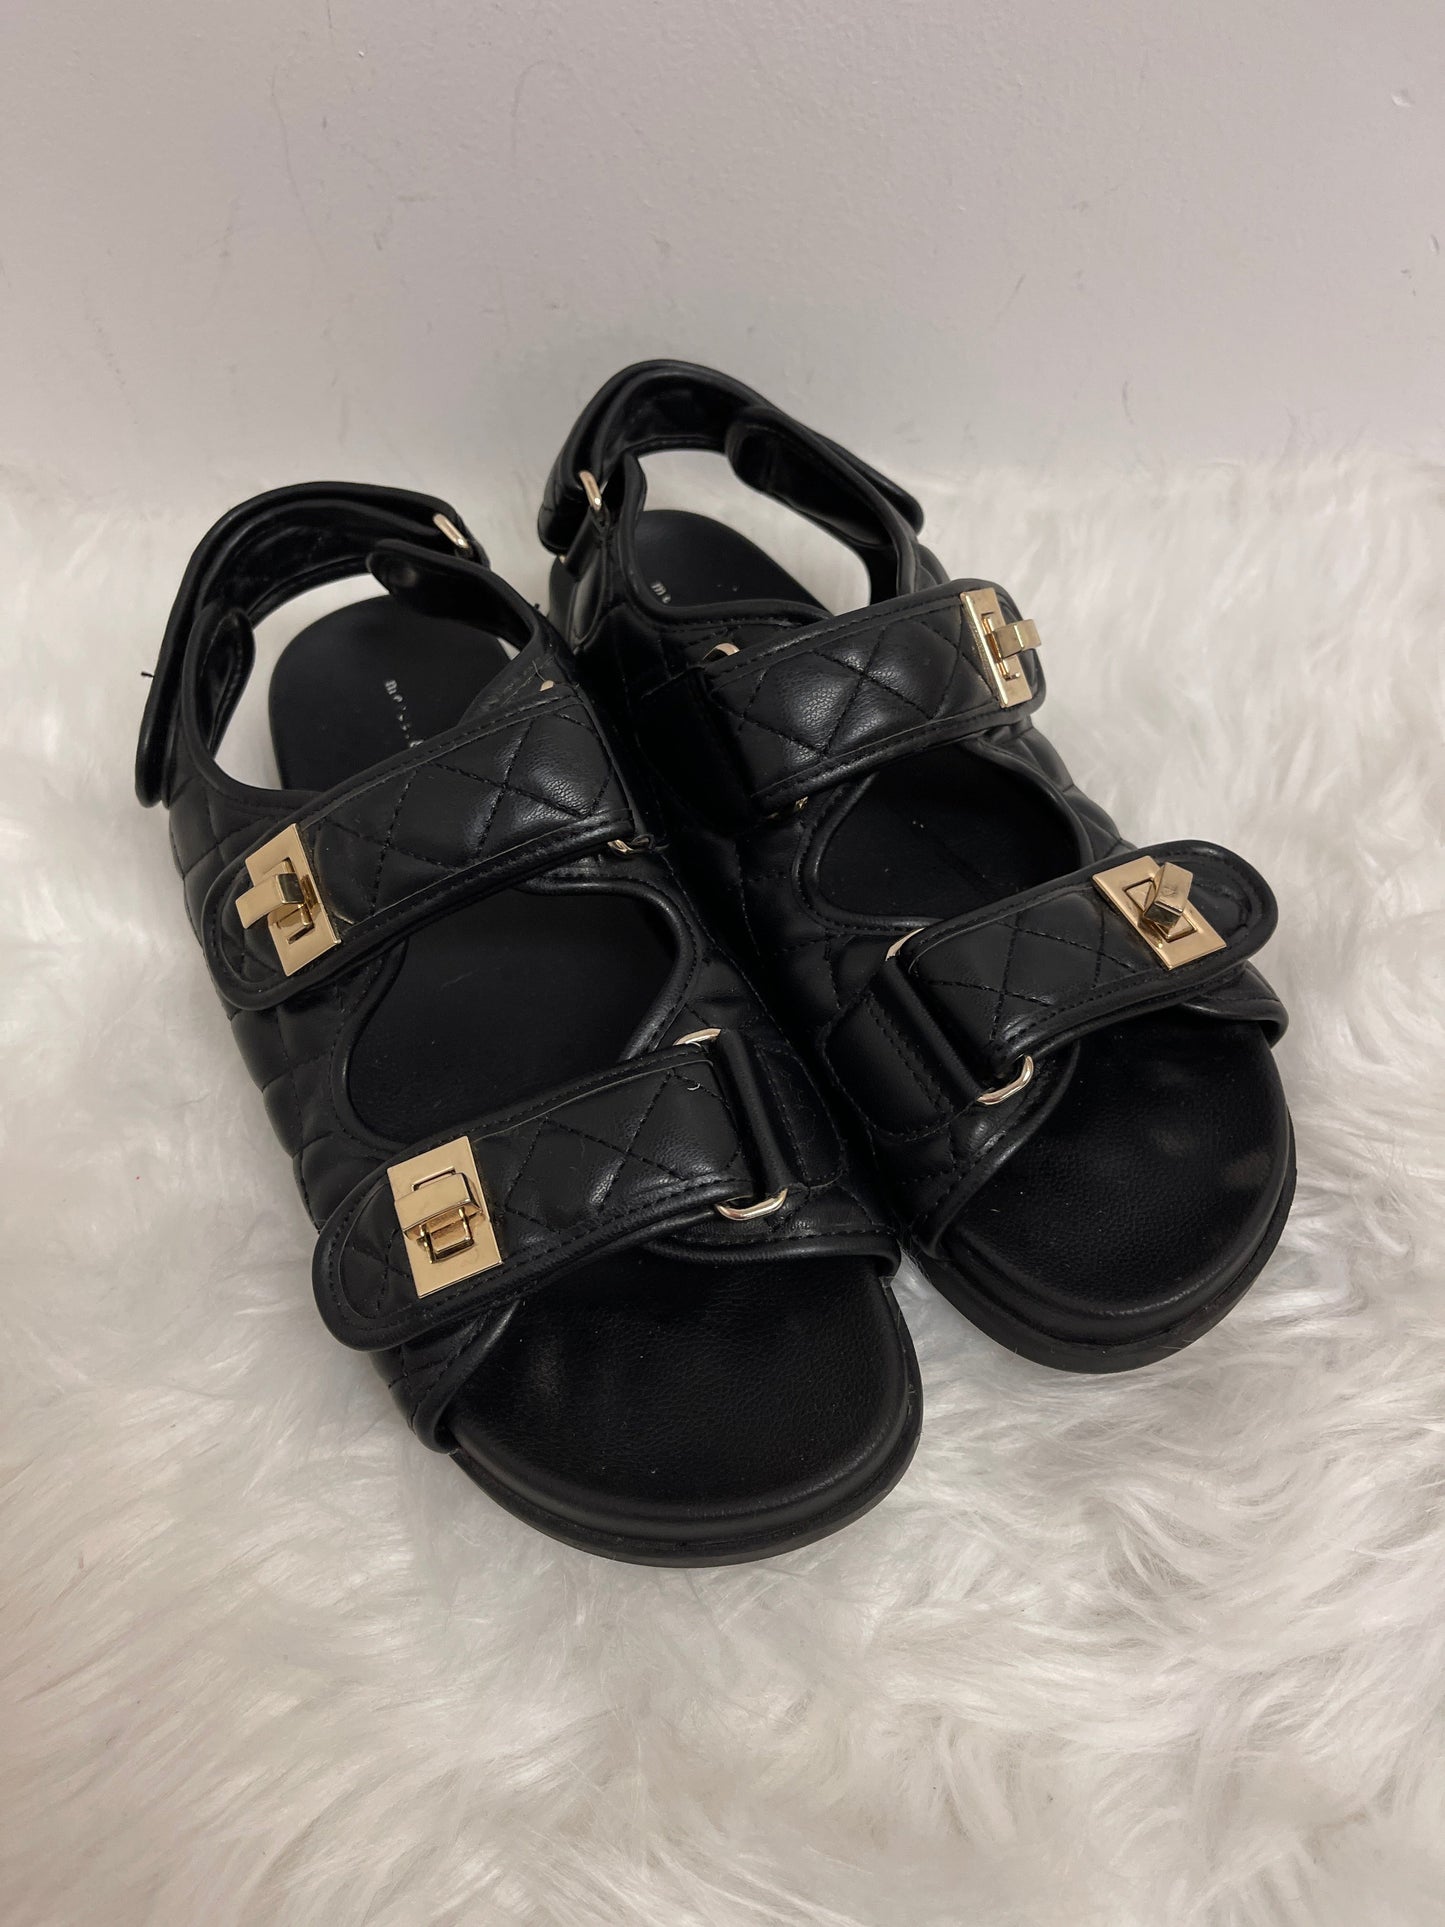 Black Sandals Flats Clothes Mentor, Size 9